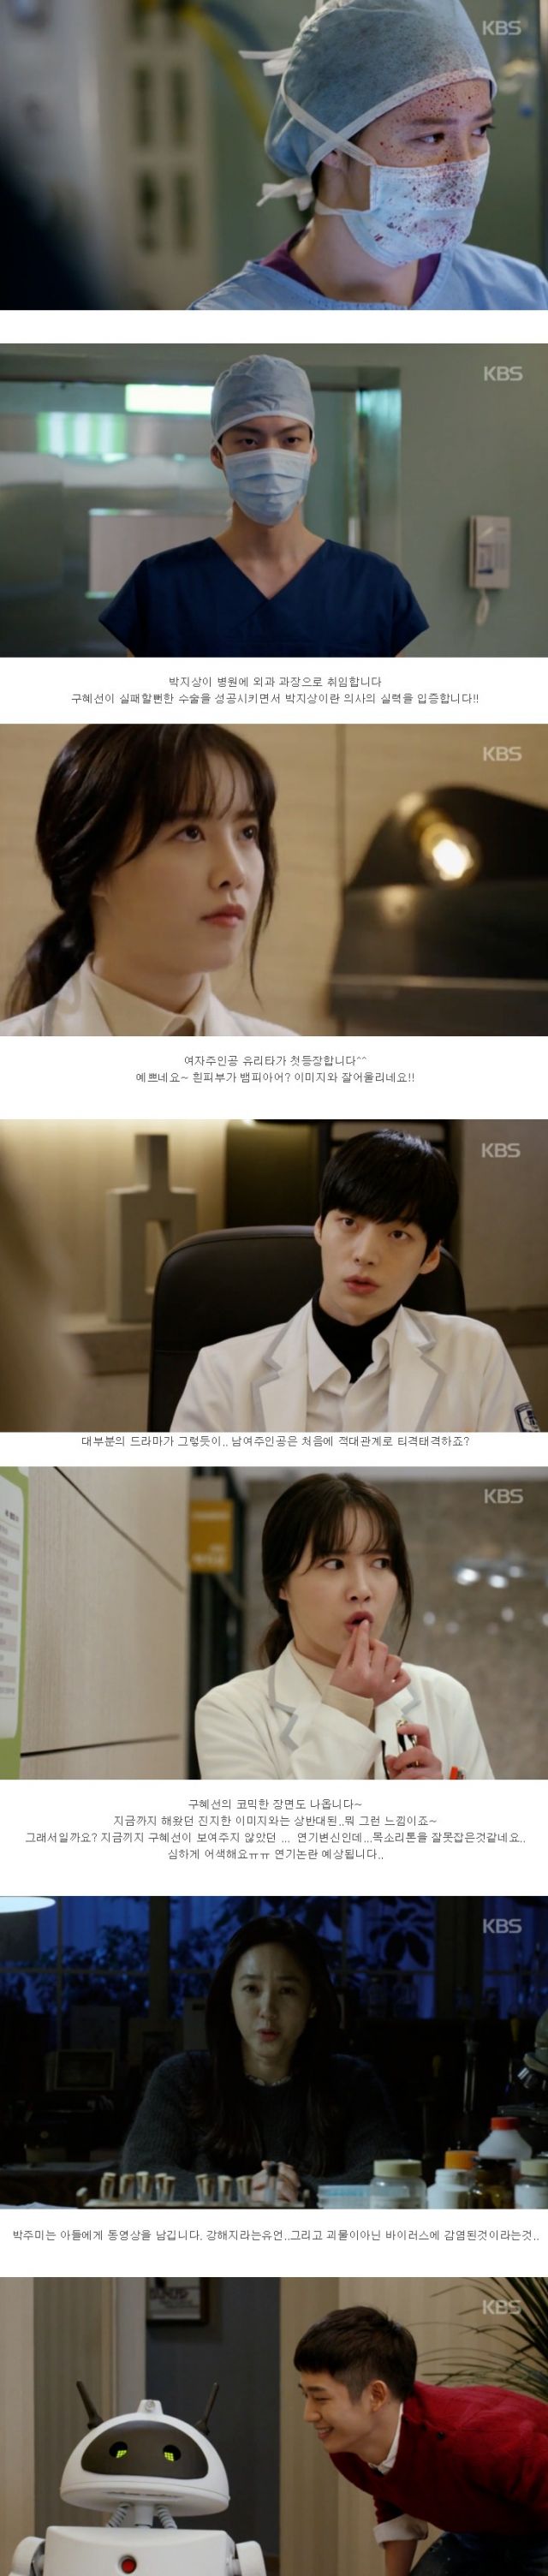 episode 2 captures for the Korean drama 'Blood'